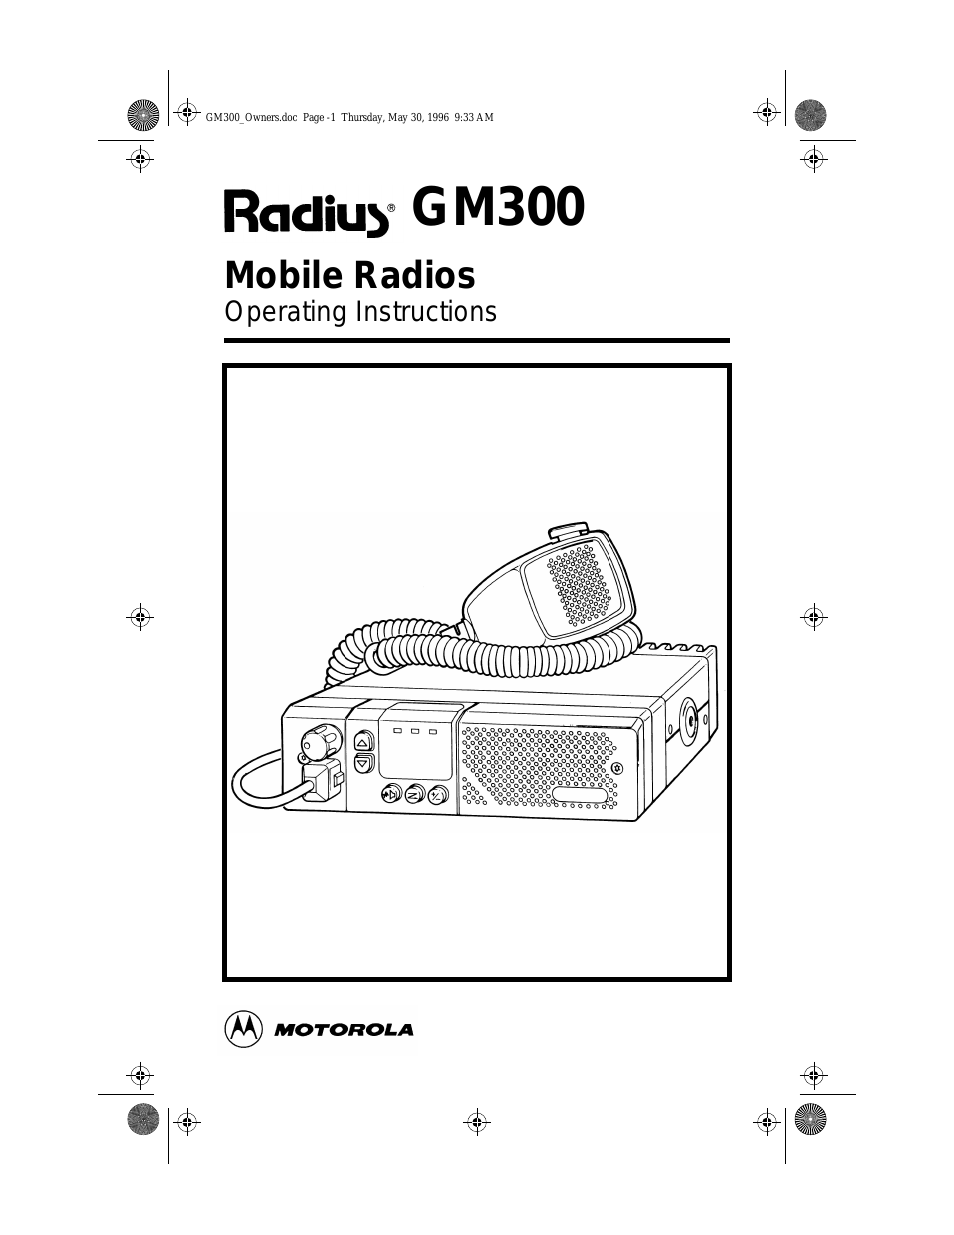 RADIUS GM300